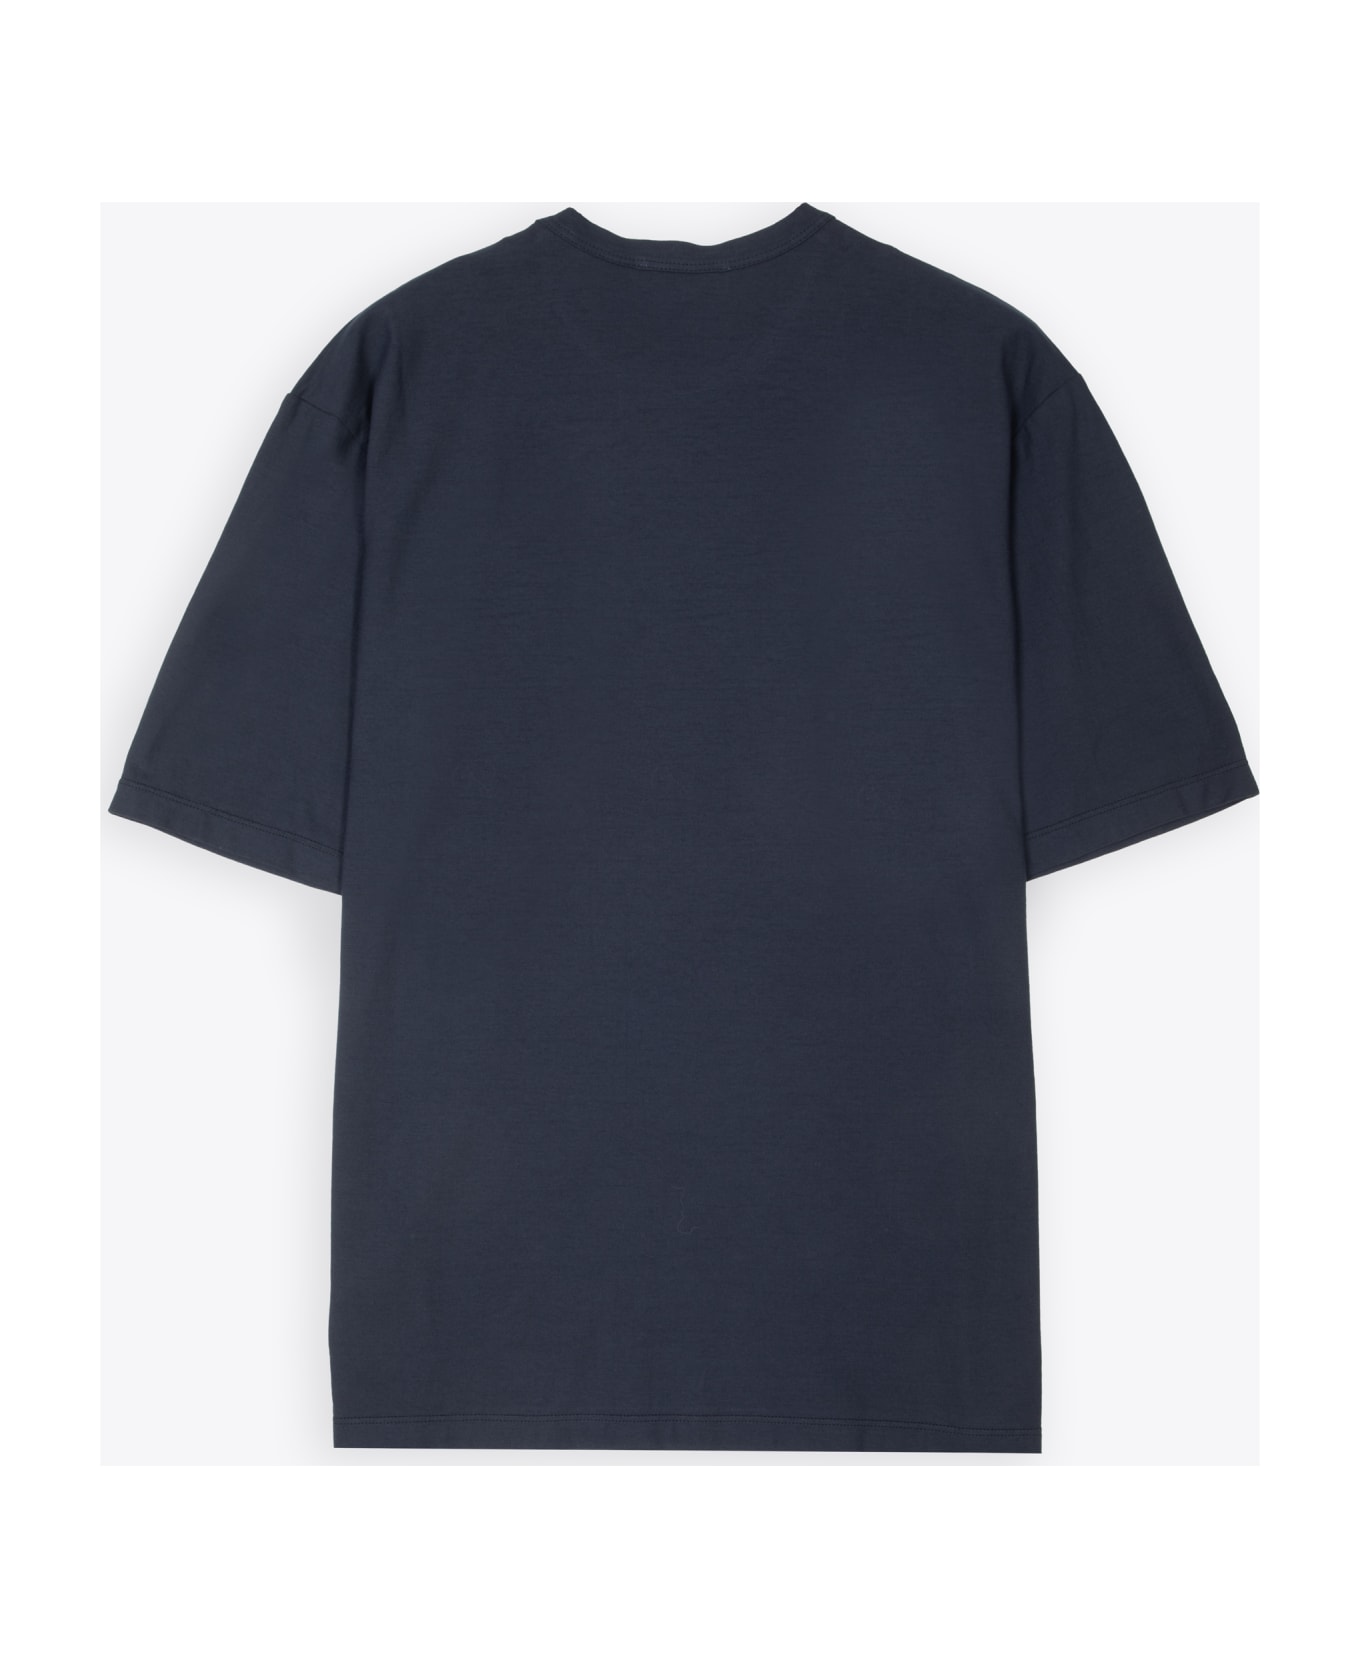 Piacenza Cashmere T-shirt Dark blue lightweight cotton t-shirt - Blu scuro